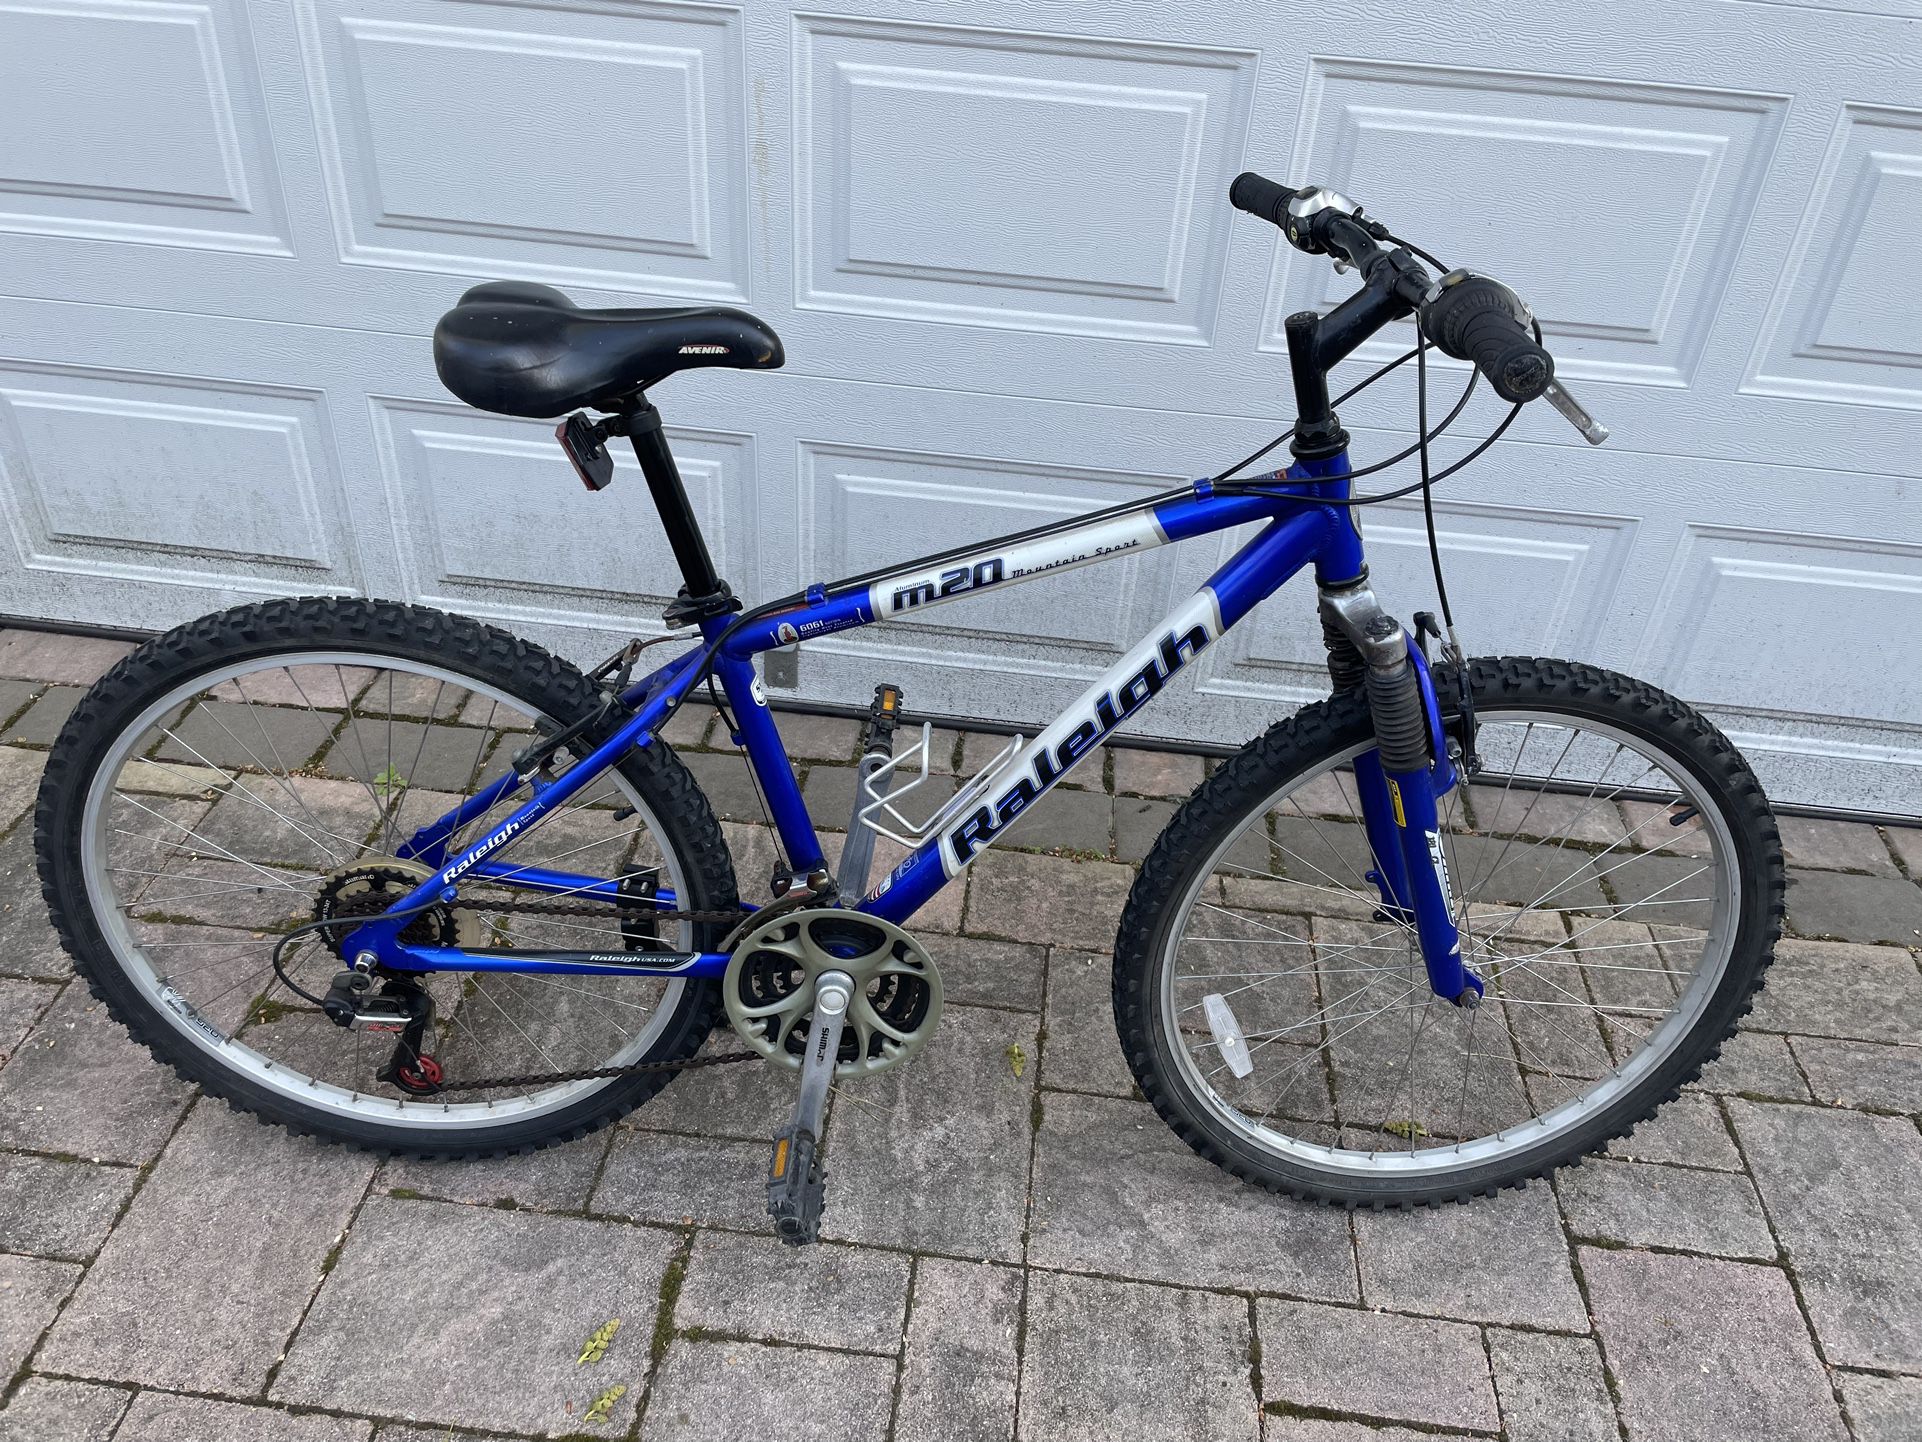 26” Raleigh M20 Aluminum mountain bike (Small 16” frame) 26” wheels